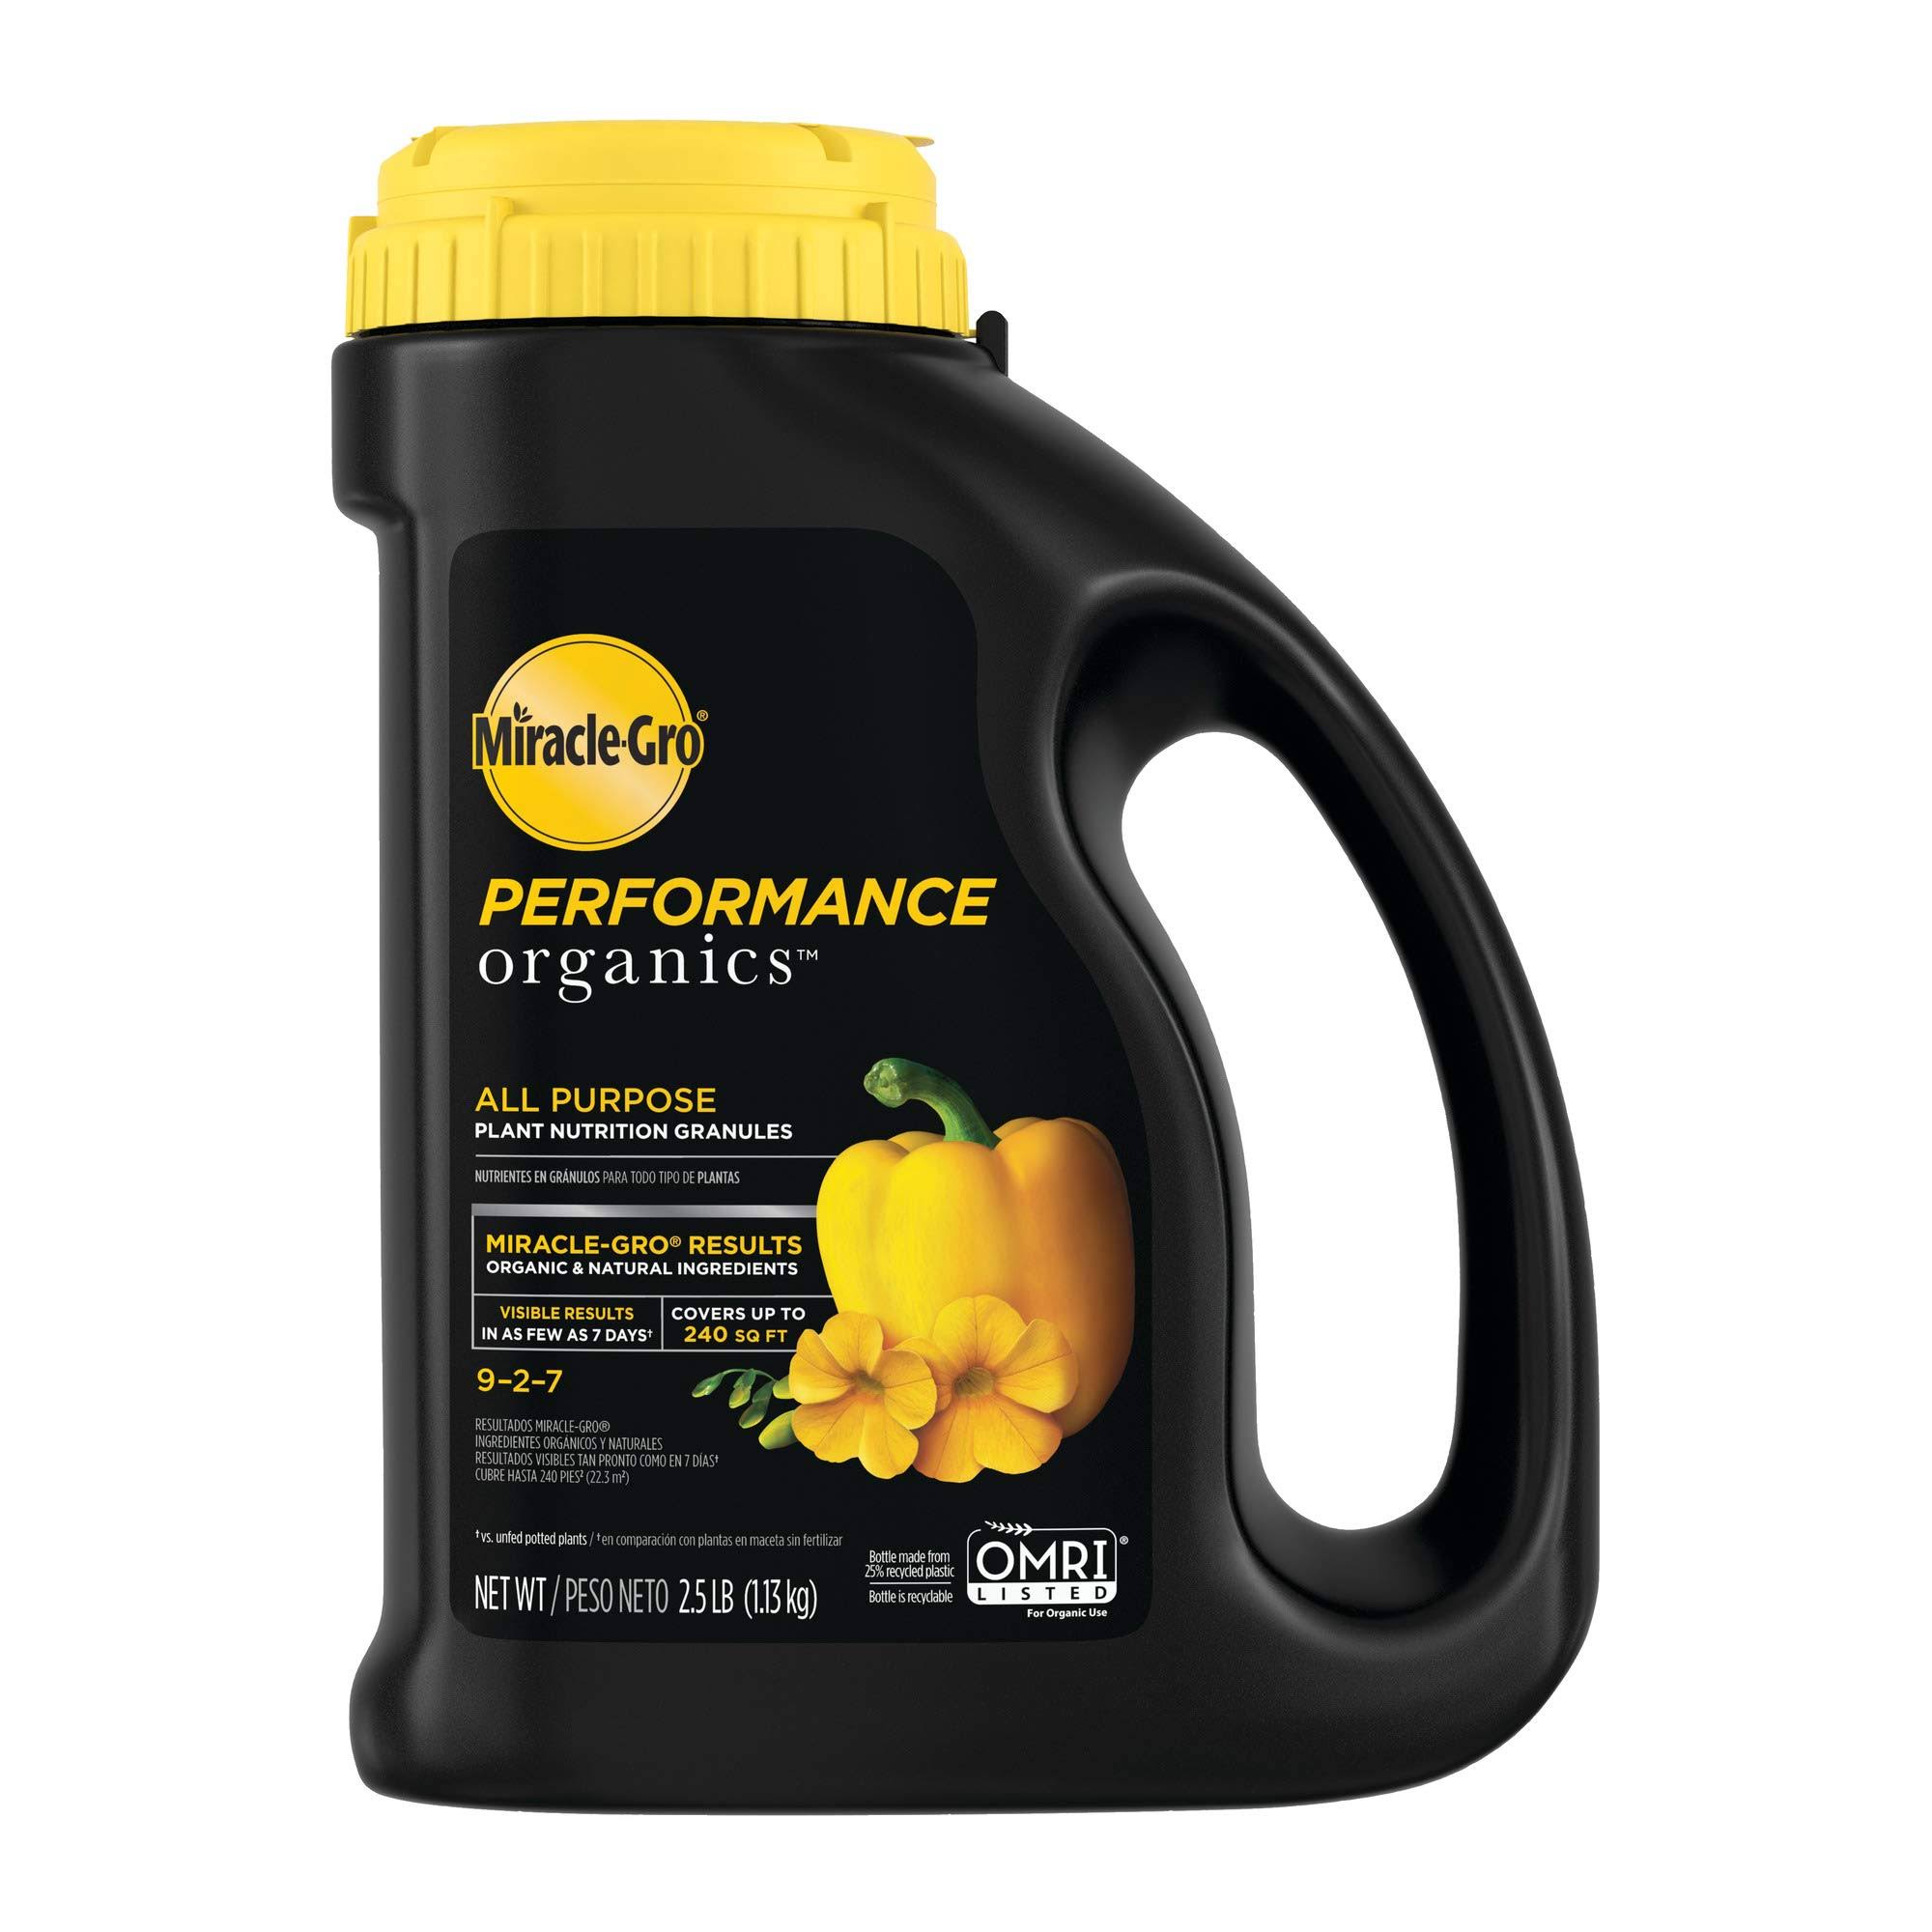 Miracle-Gro Performance Organics 2.5 lb. 9-2-7 Dry Plant Food 3003510